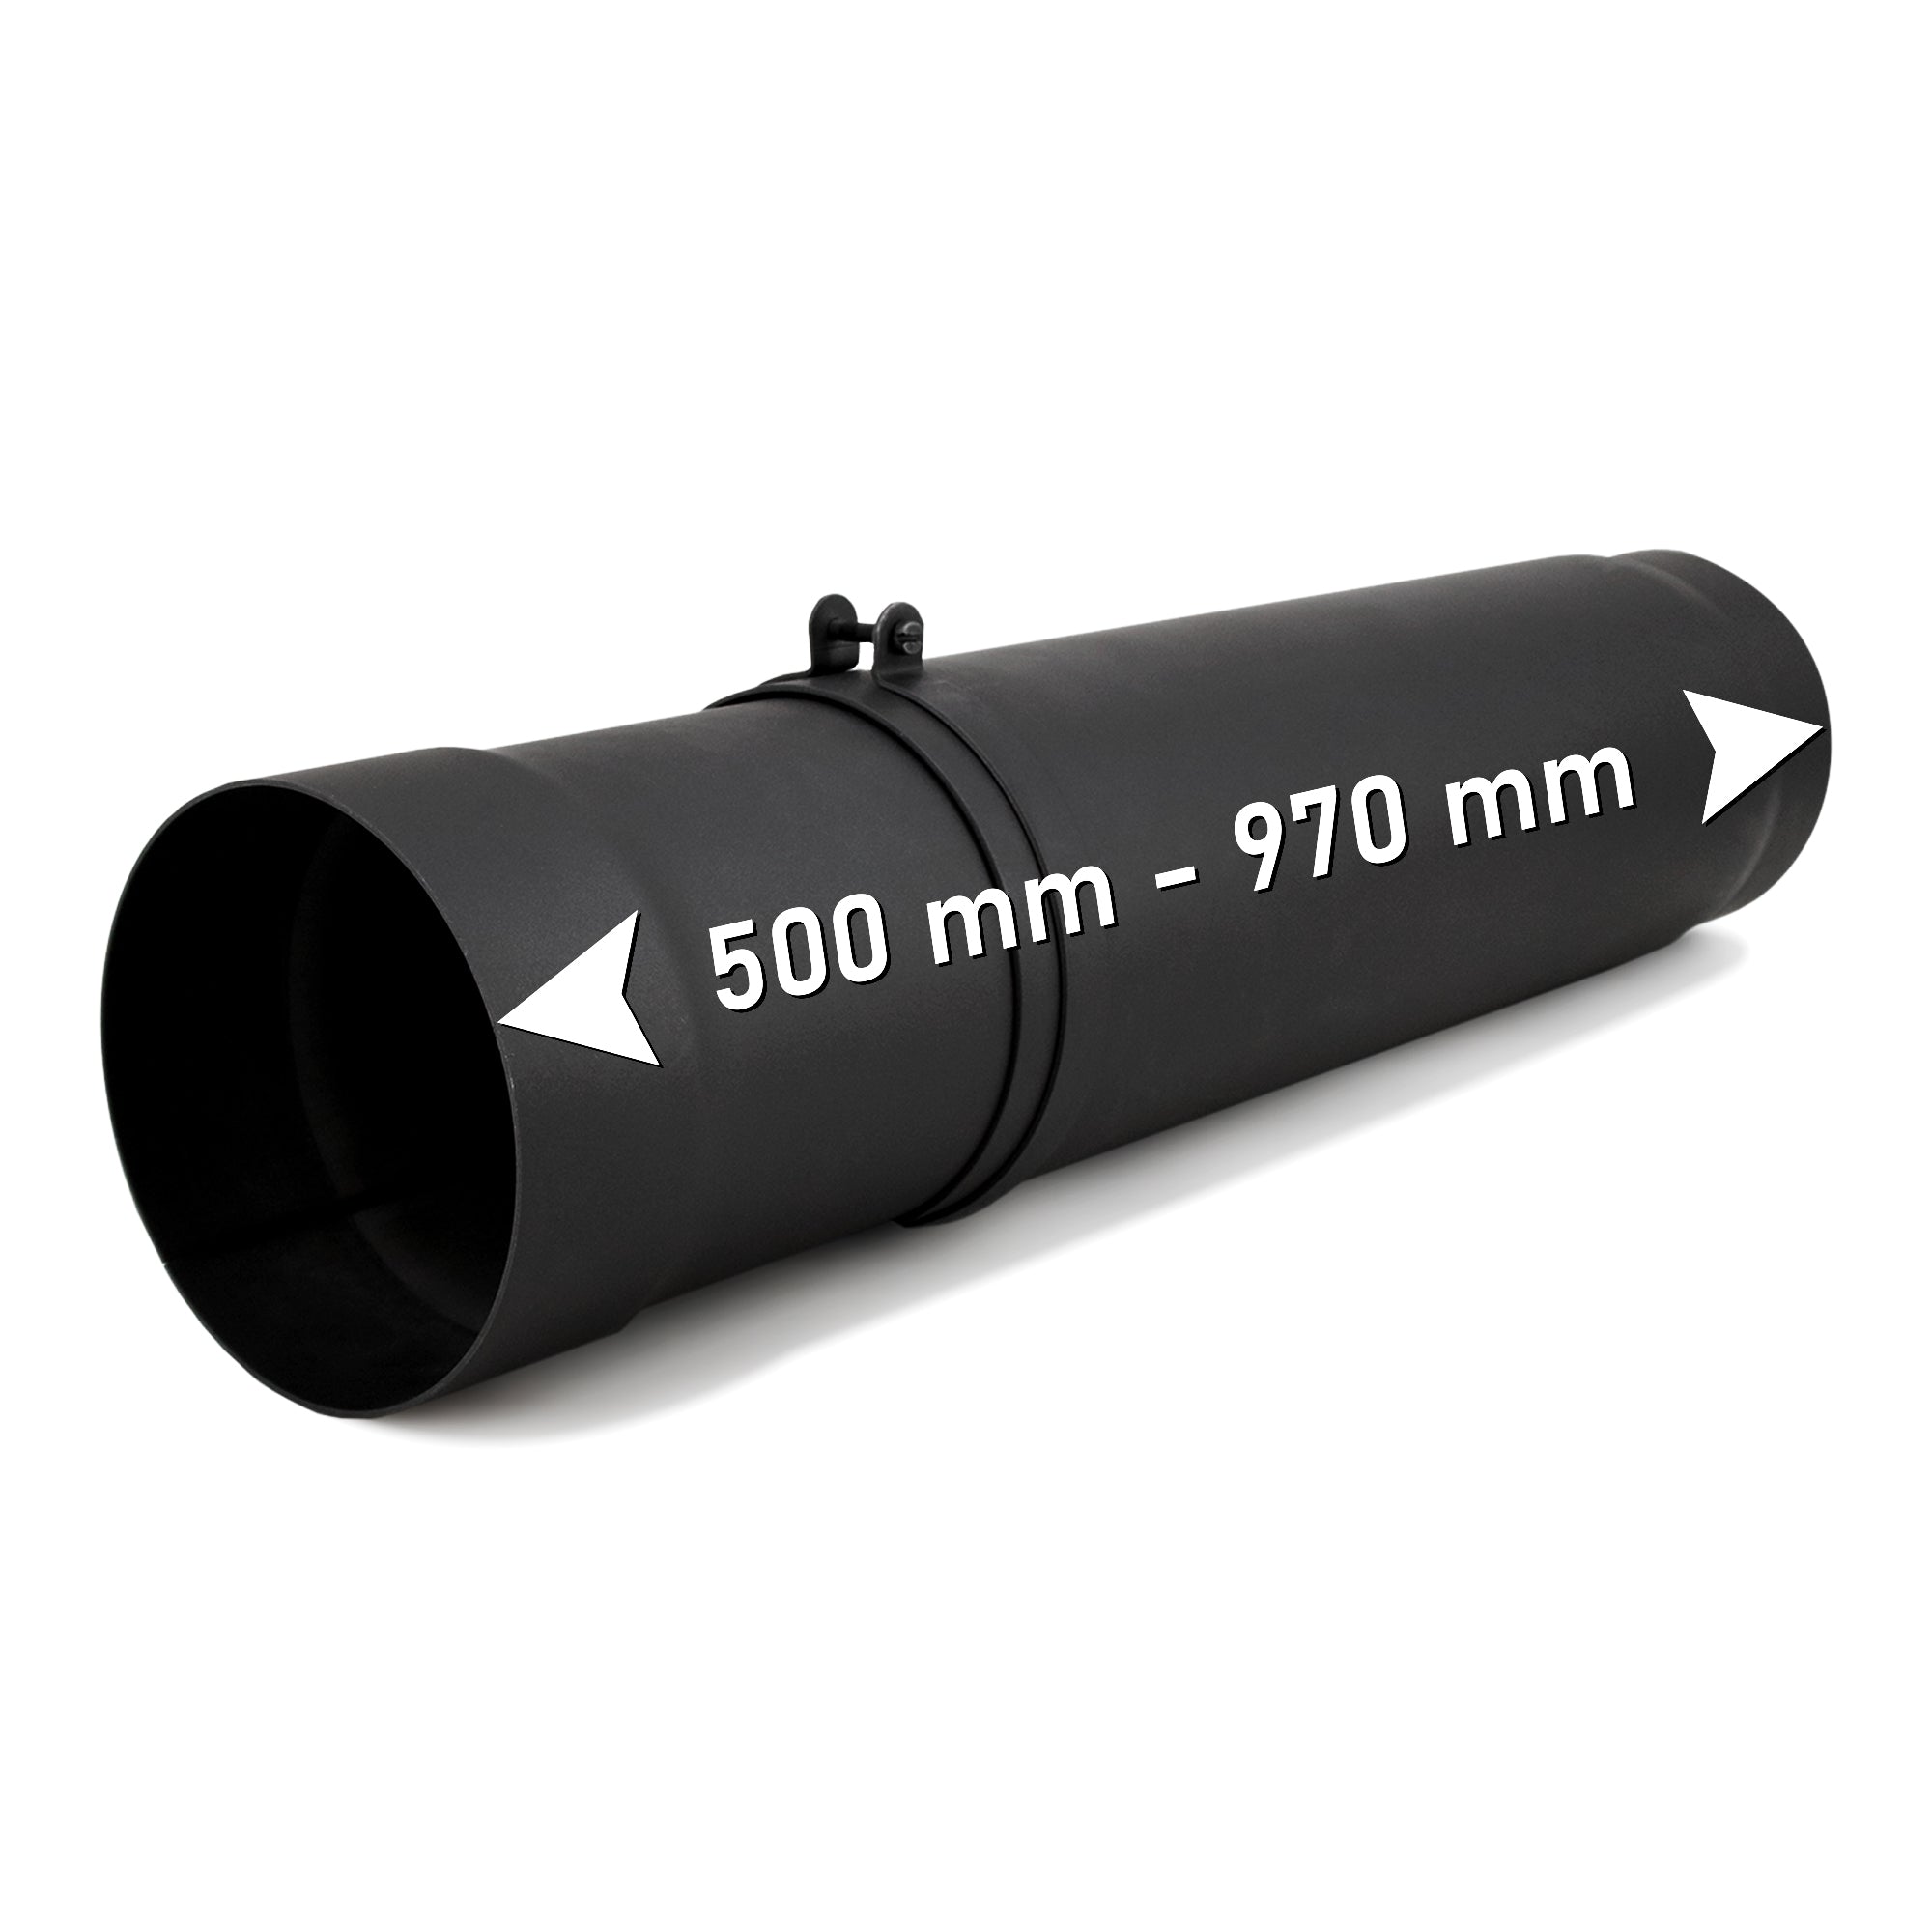 Telescopic tube 500 mm - 970 mm adjustable 